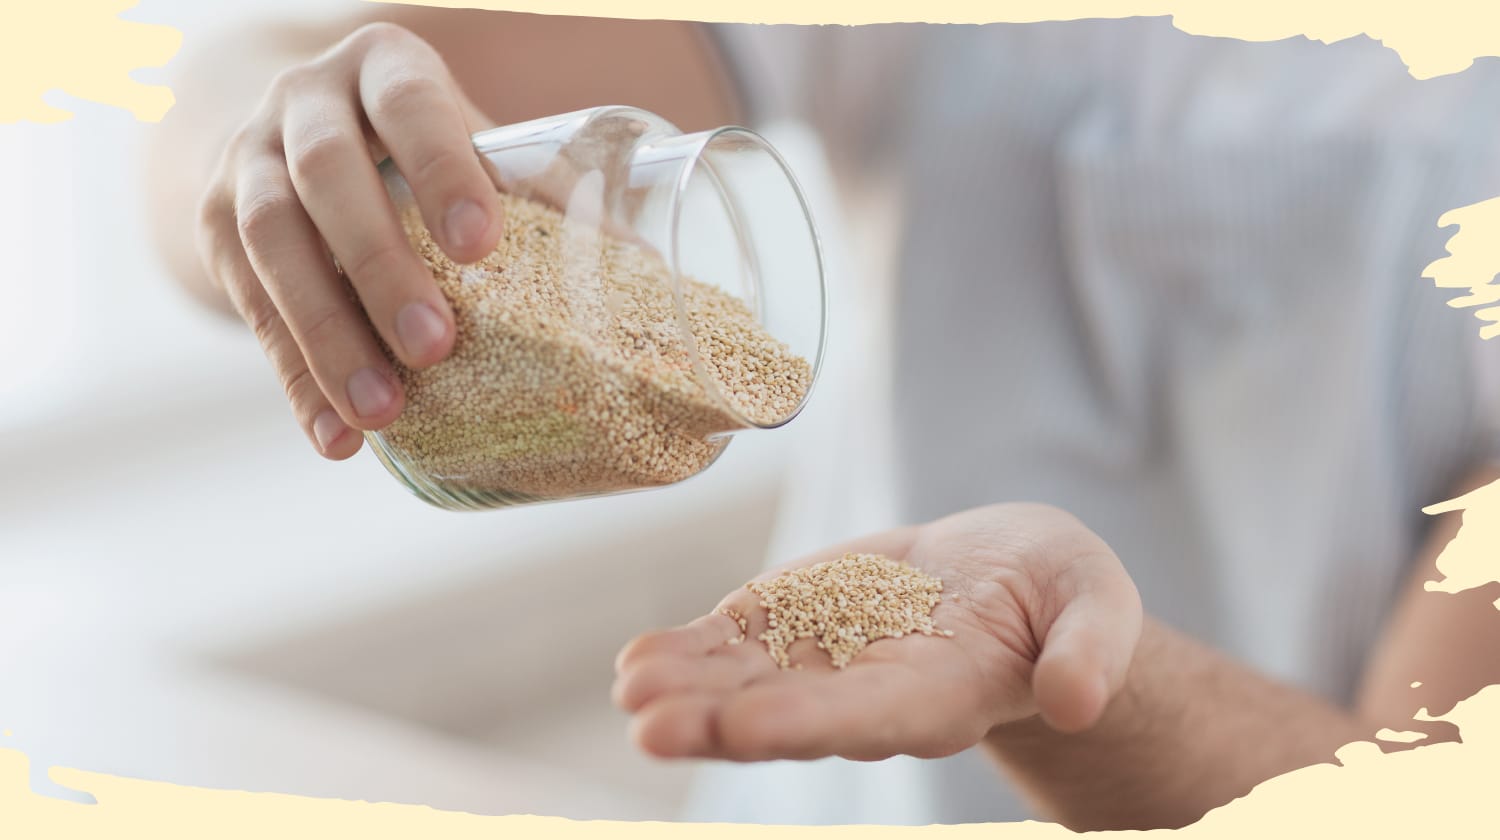 benefits of sesame seeds